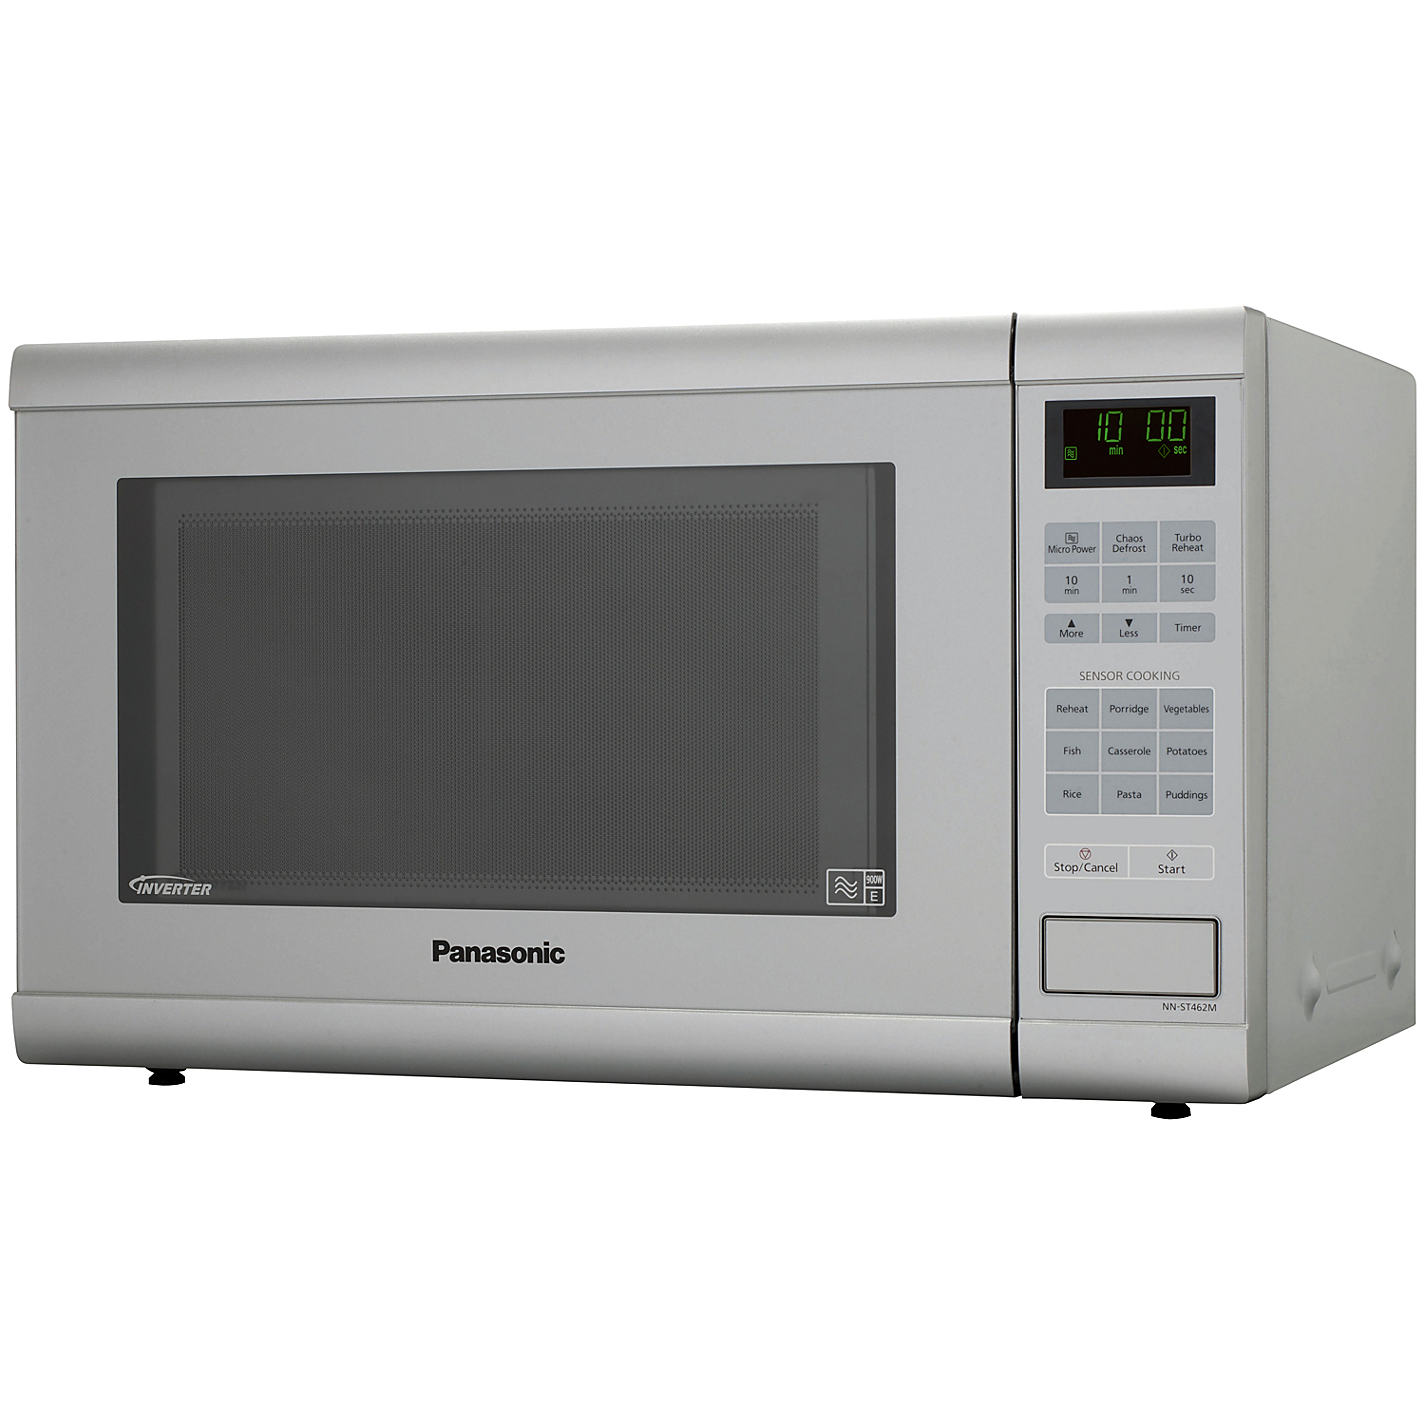 Panasonic Inverter 900w Microwave Manual